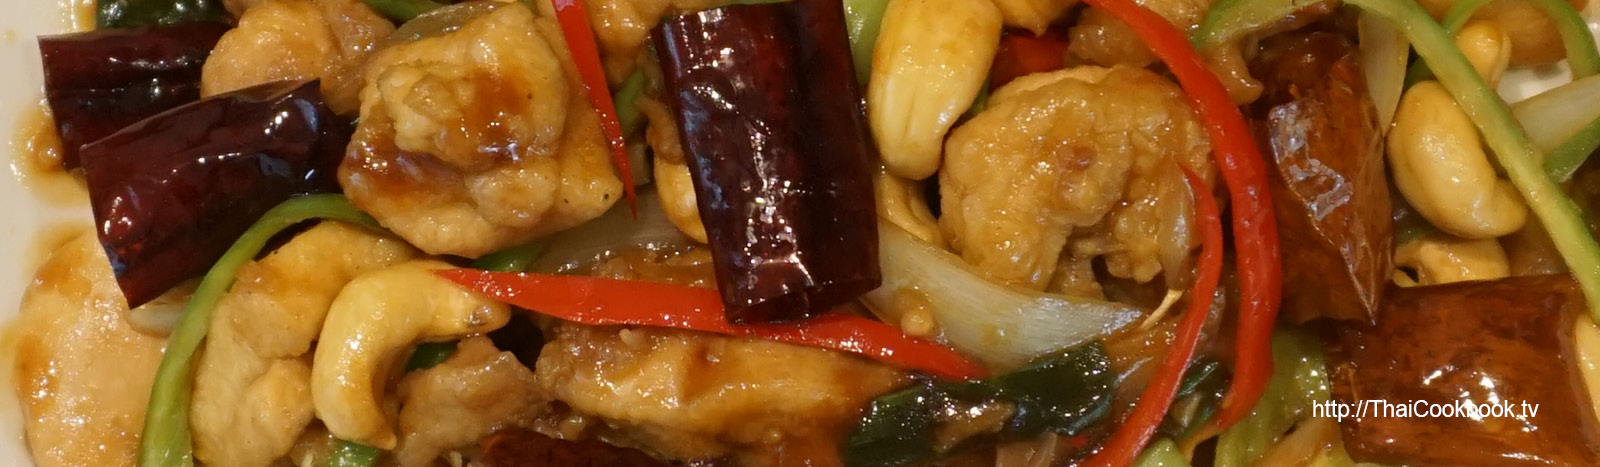 Authentic Thai recipe for Cashew Chicken